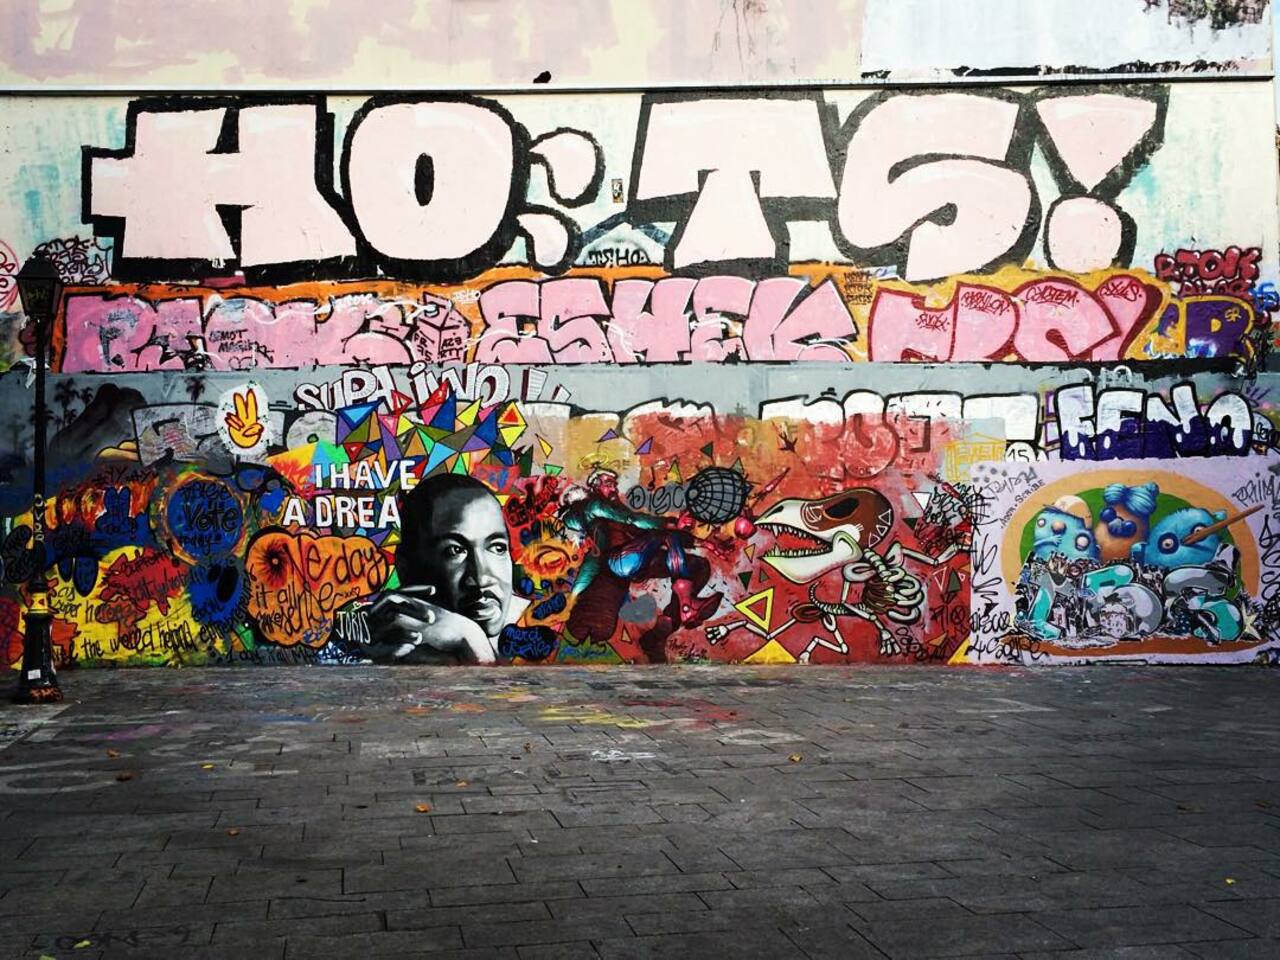 #Paris #graffiti photo by @allaboutparisandbeyond http://ift.tt/1Gw1hls #StreetArt http://t.co/YYDJhA9zXS